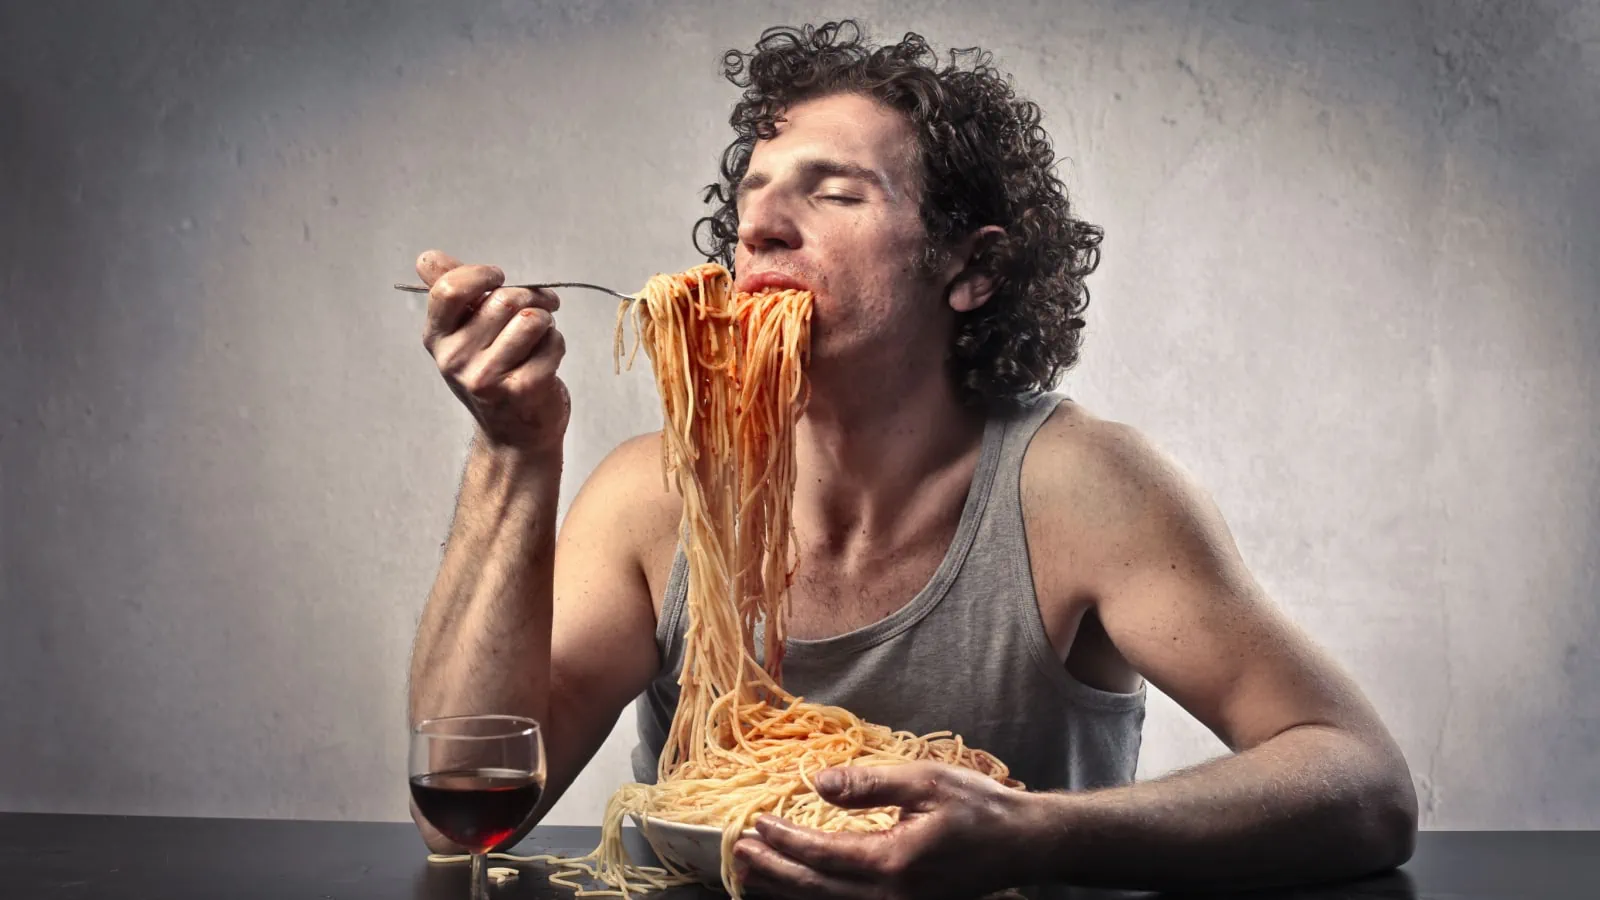 Man eating spaghetti messily